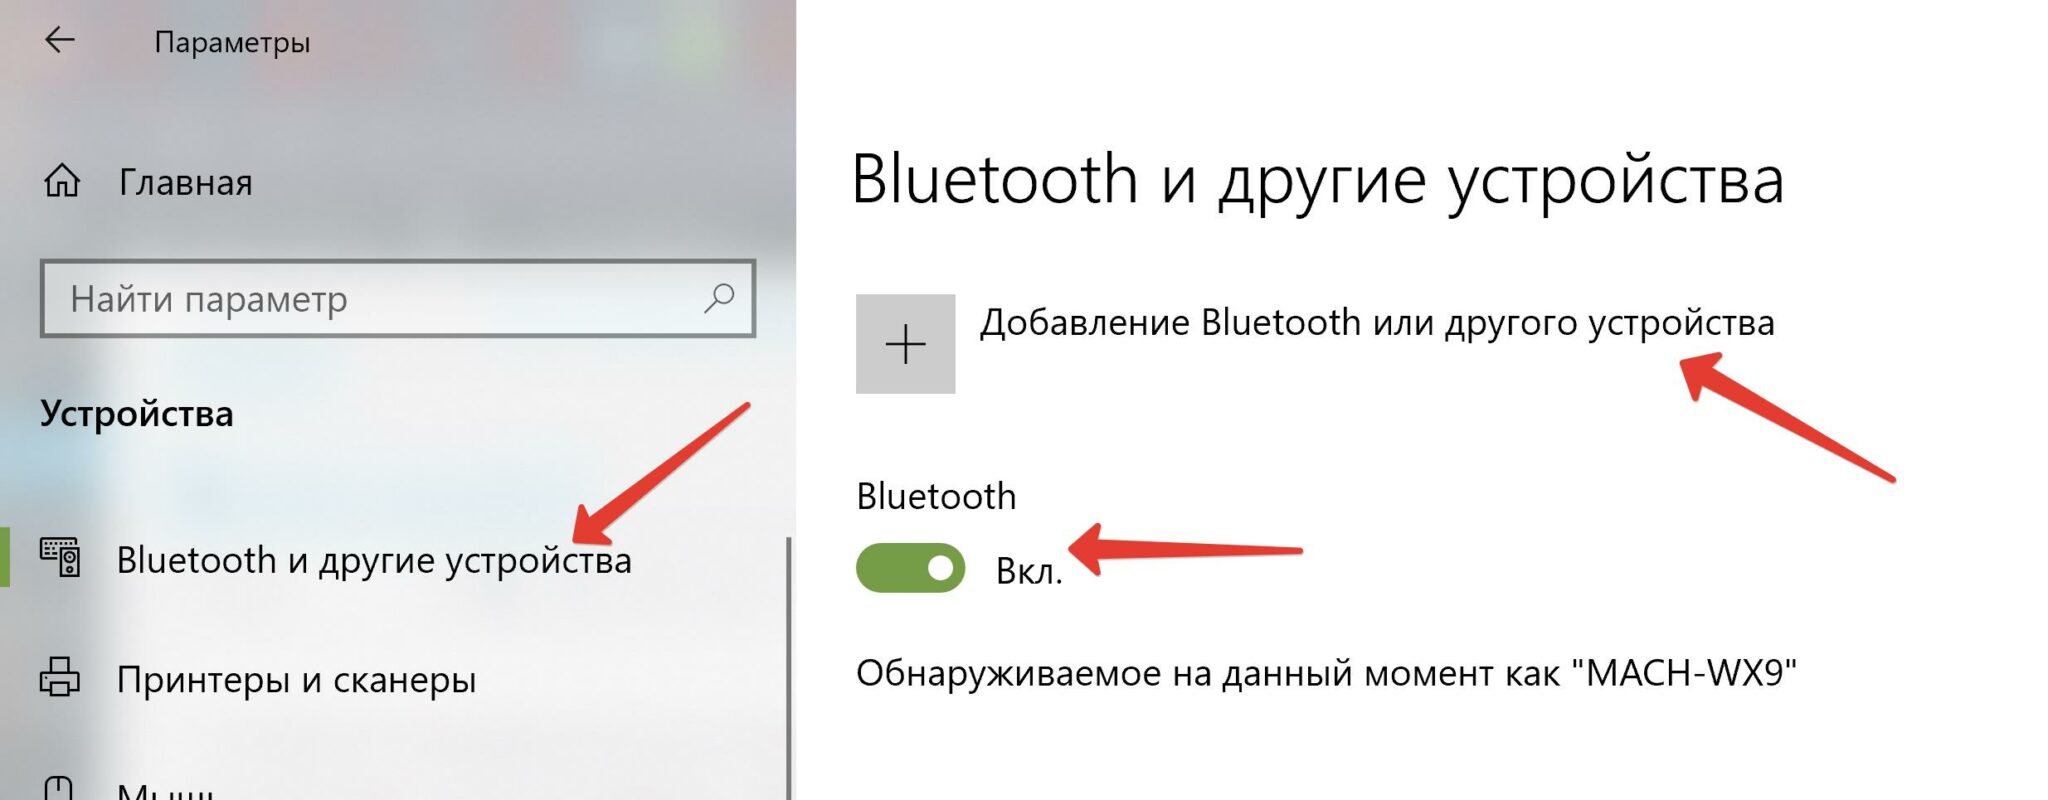 Телефон не видит блютуз колонку. Как подключить блютуз на компьютере. Включить блютуз на виндовс 10. Как включить блютуз на виндовс 10 если нет кнопки включения. Как найти блютуз на ноутбуке Windows 10.